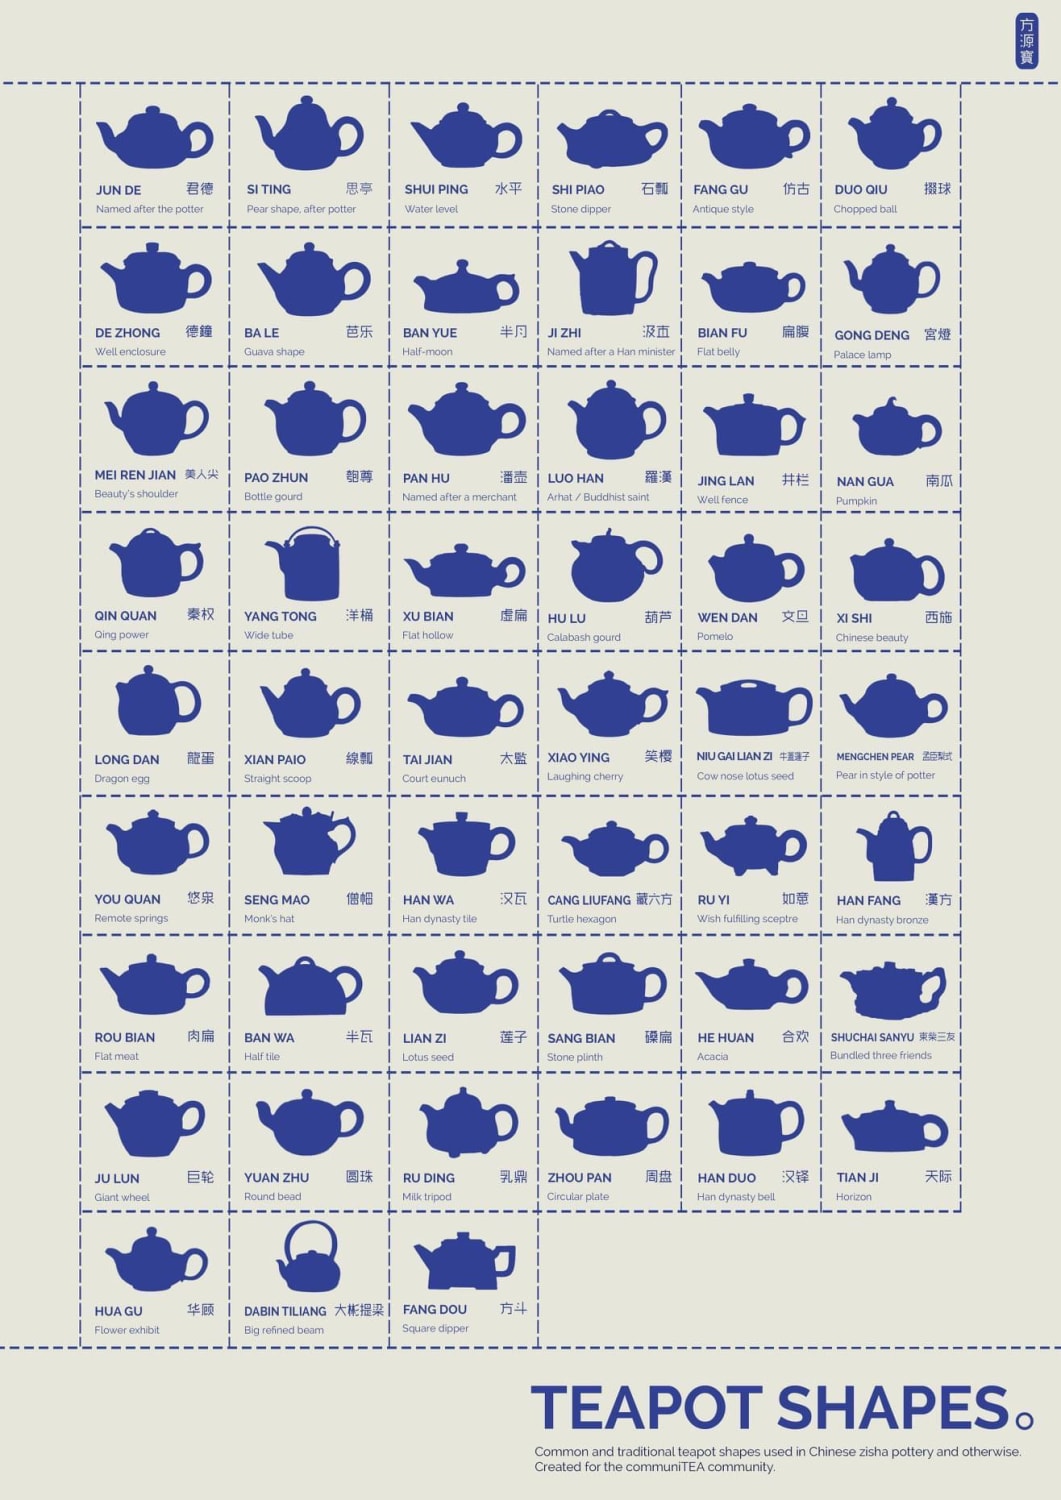 Teapot shapes